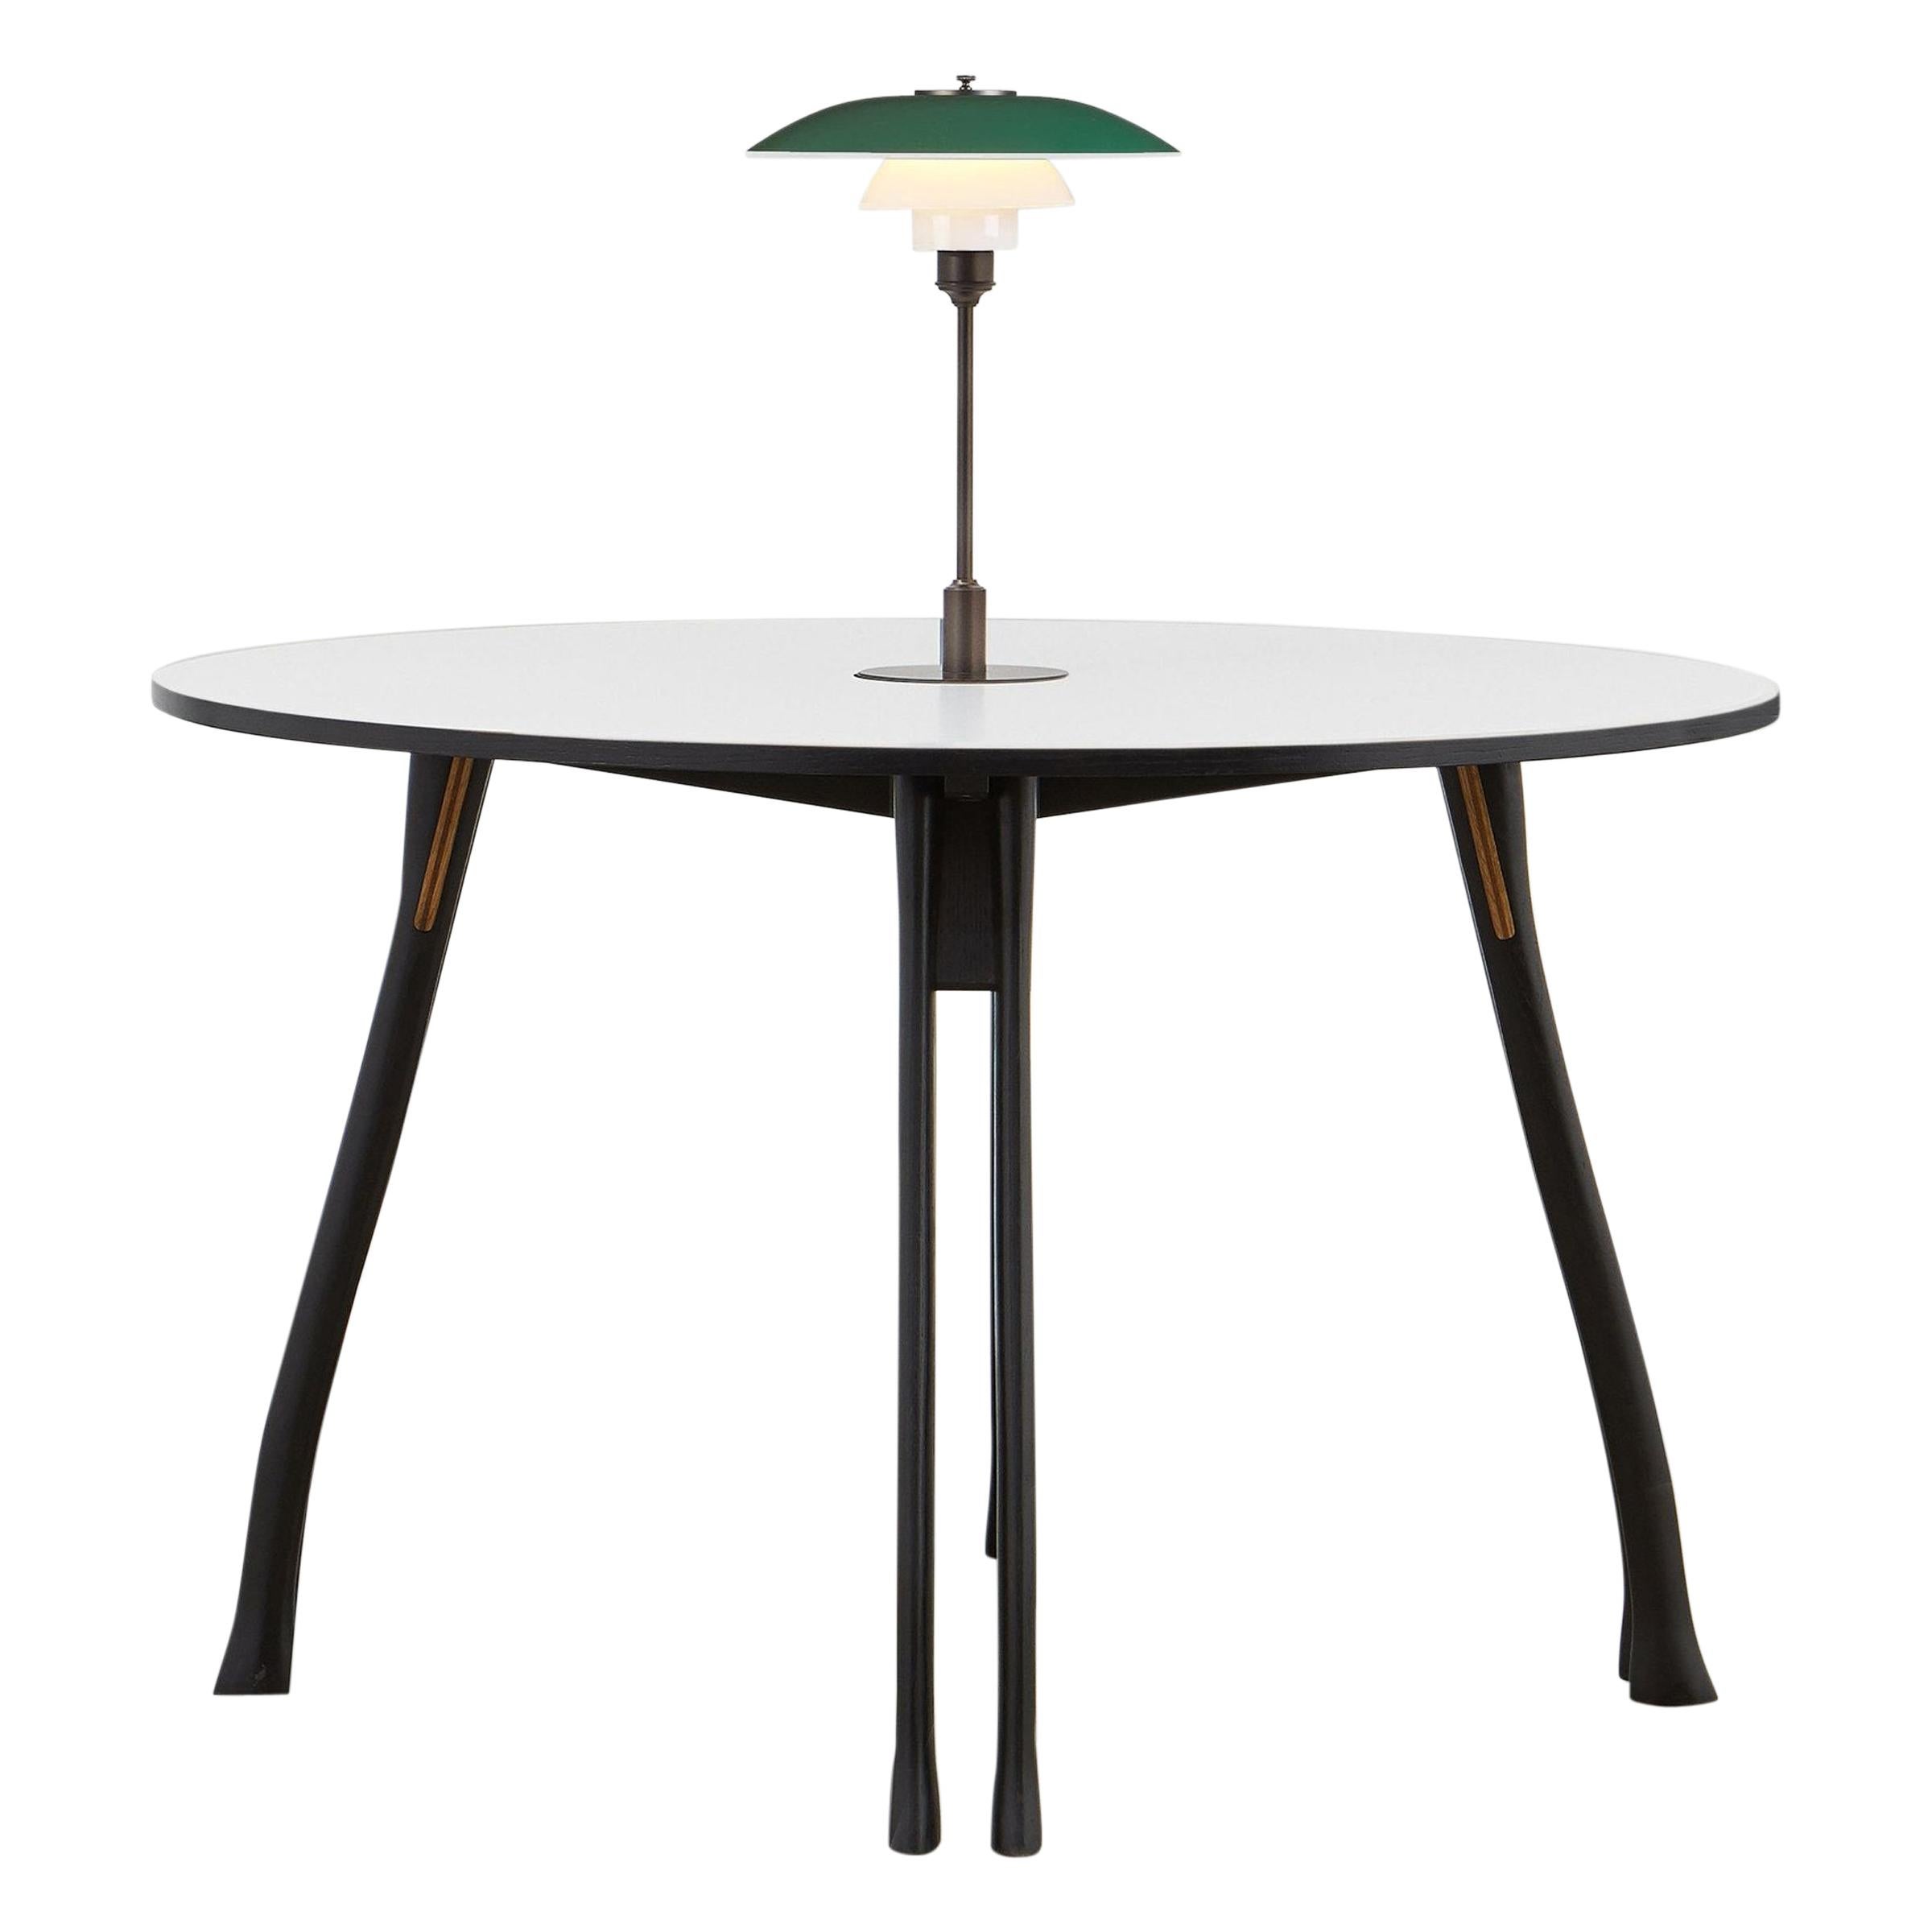 PH Axe Table, black oak legs, laminated plate, green PH 3 ½ - 2 ½ lamp For Sale